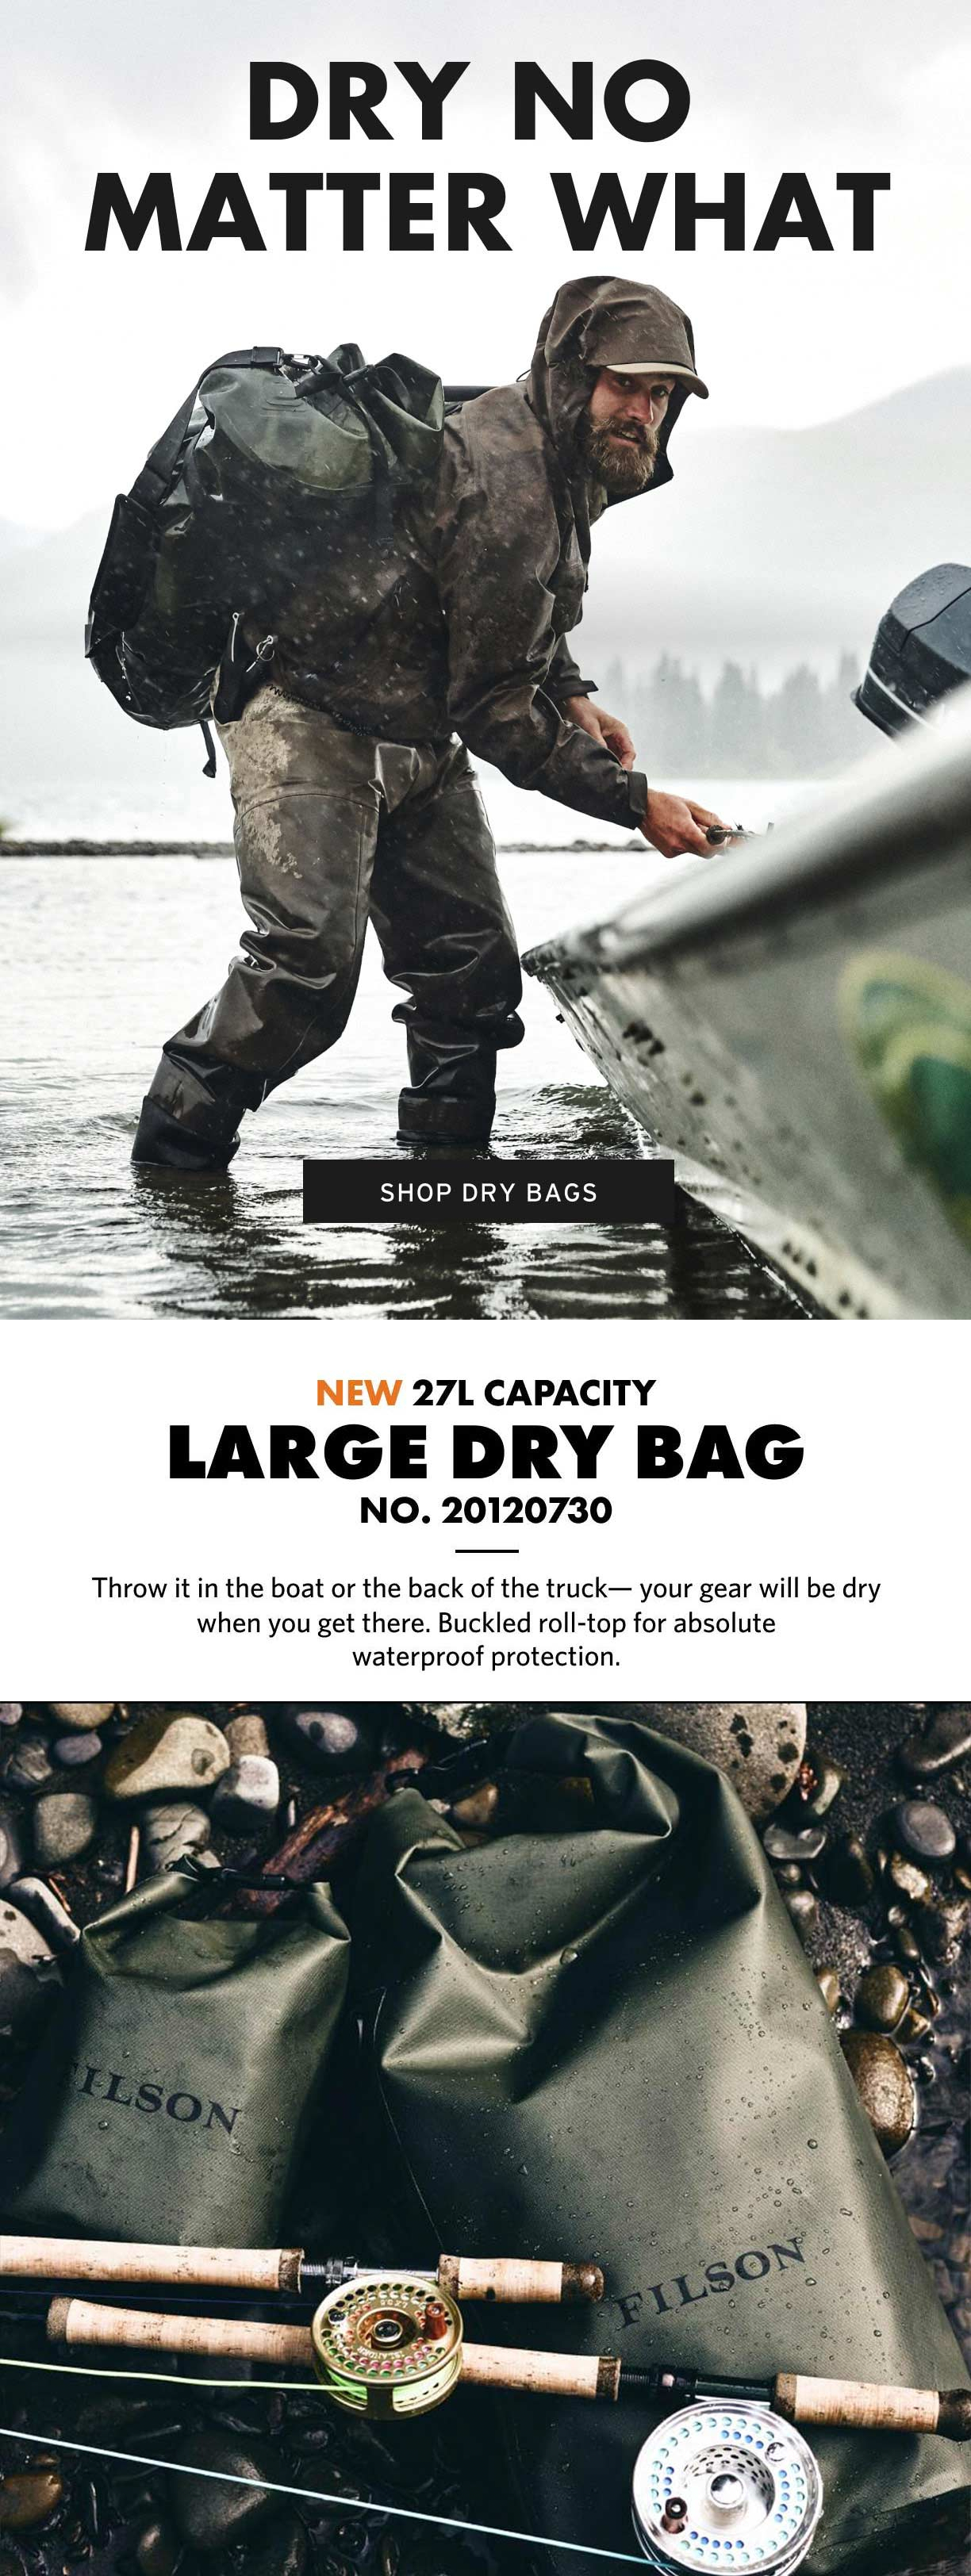 Filson Dry Bag Large Productinformation